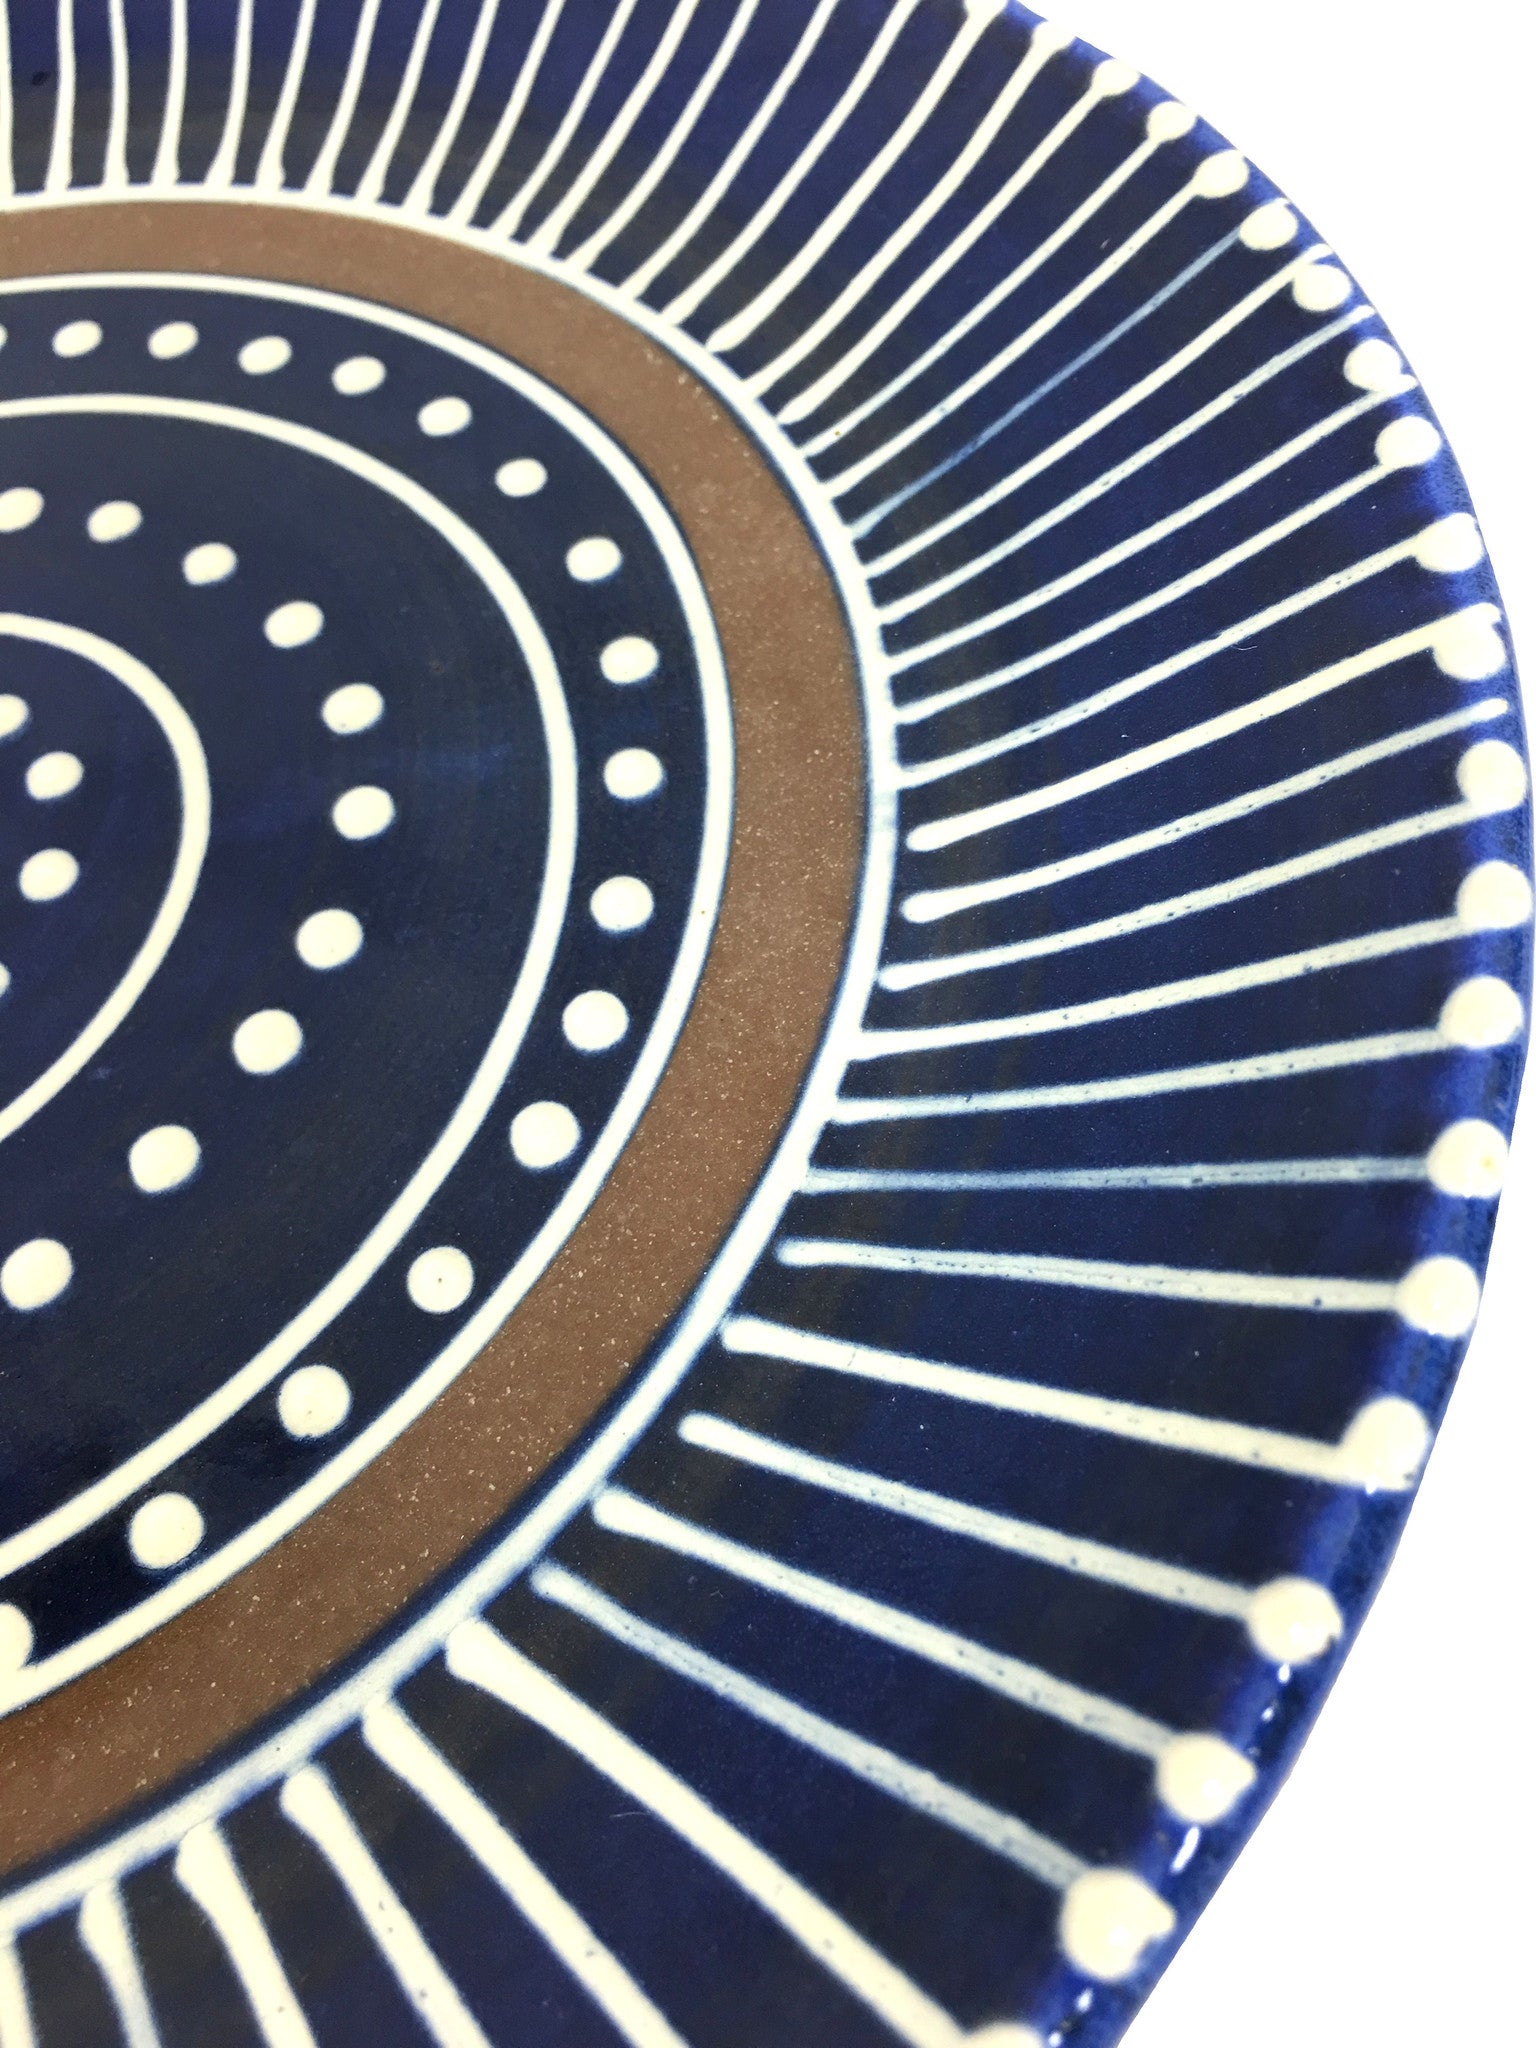 Earthworks Handmade Pottery - Small Serving Plate (Bajan Blue) - Mellow Monkey